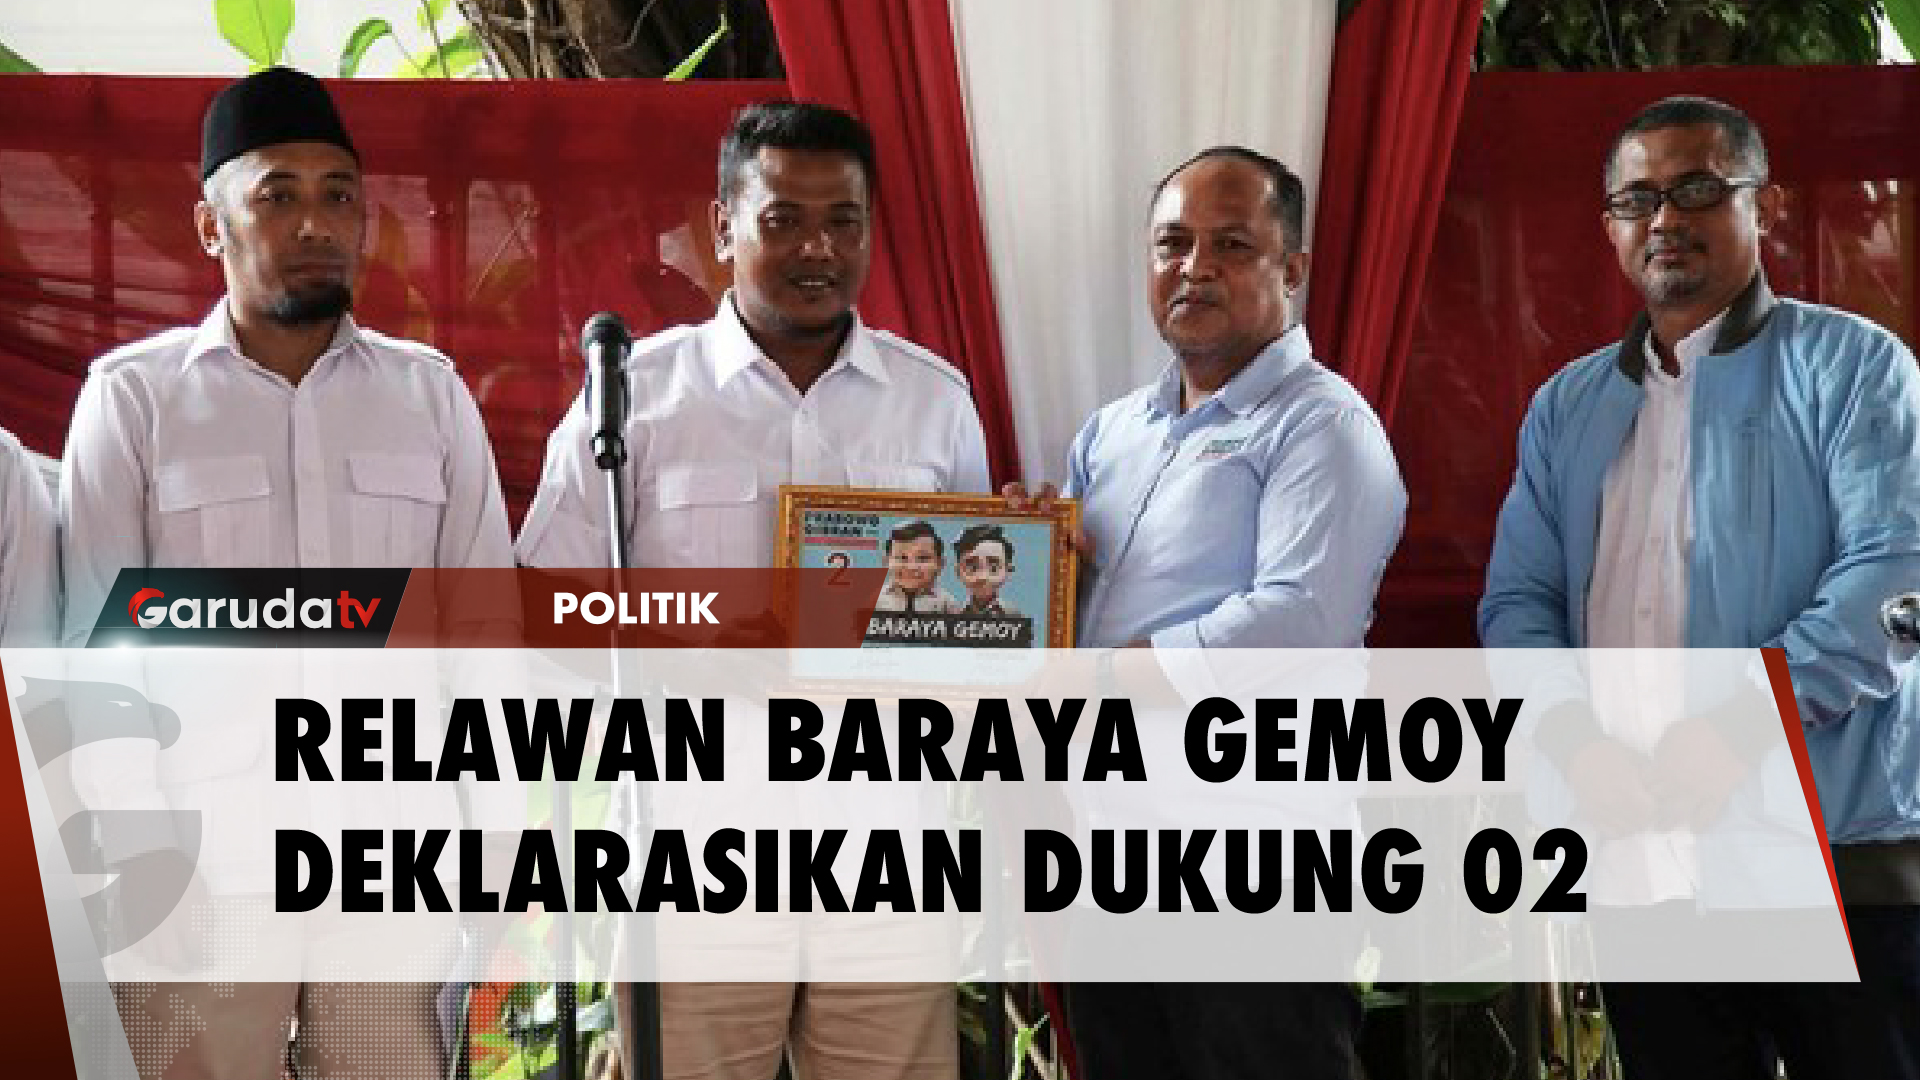 Dukungan Prabowo - Gibran terus Mengalir, Kini Datang dari Relawan Baraya Gemoy